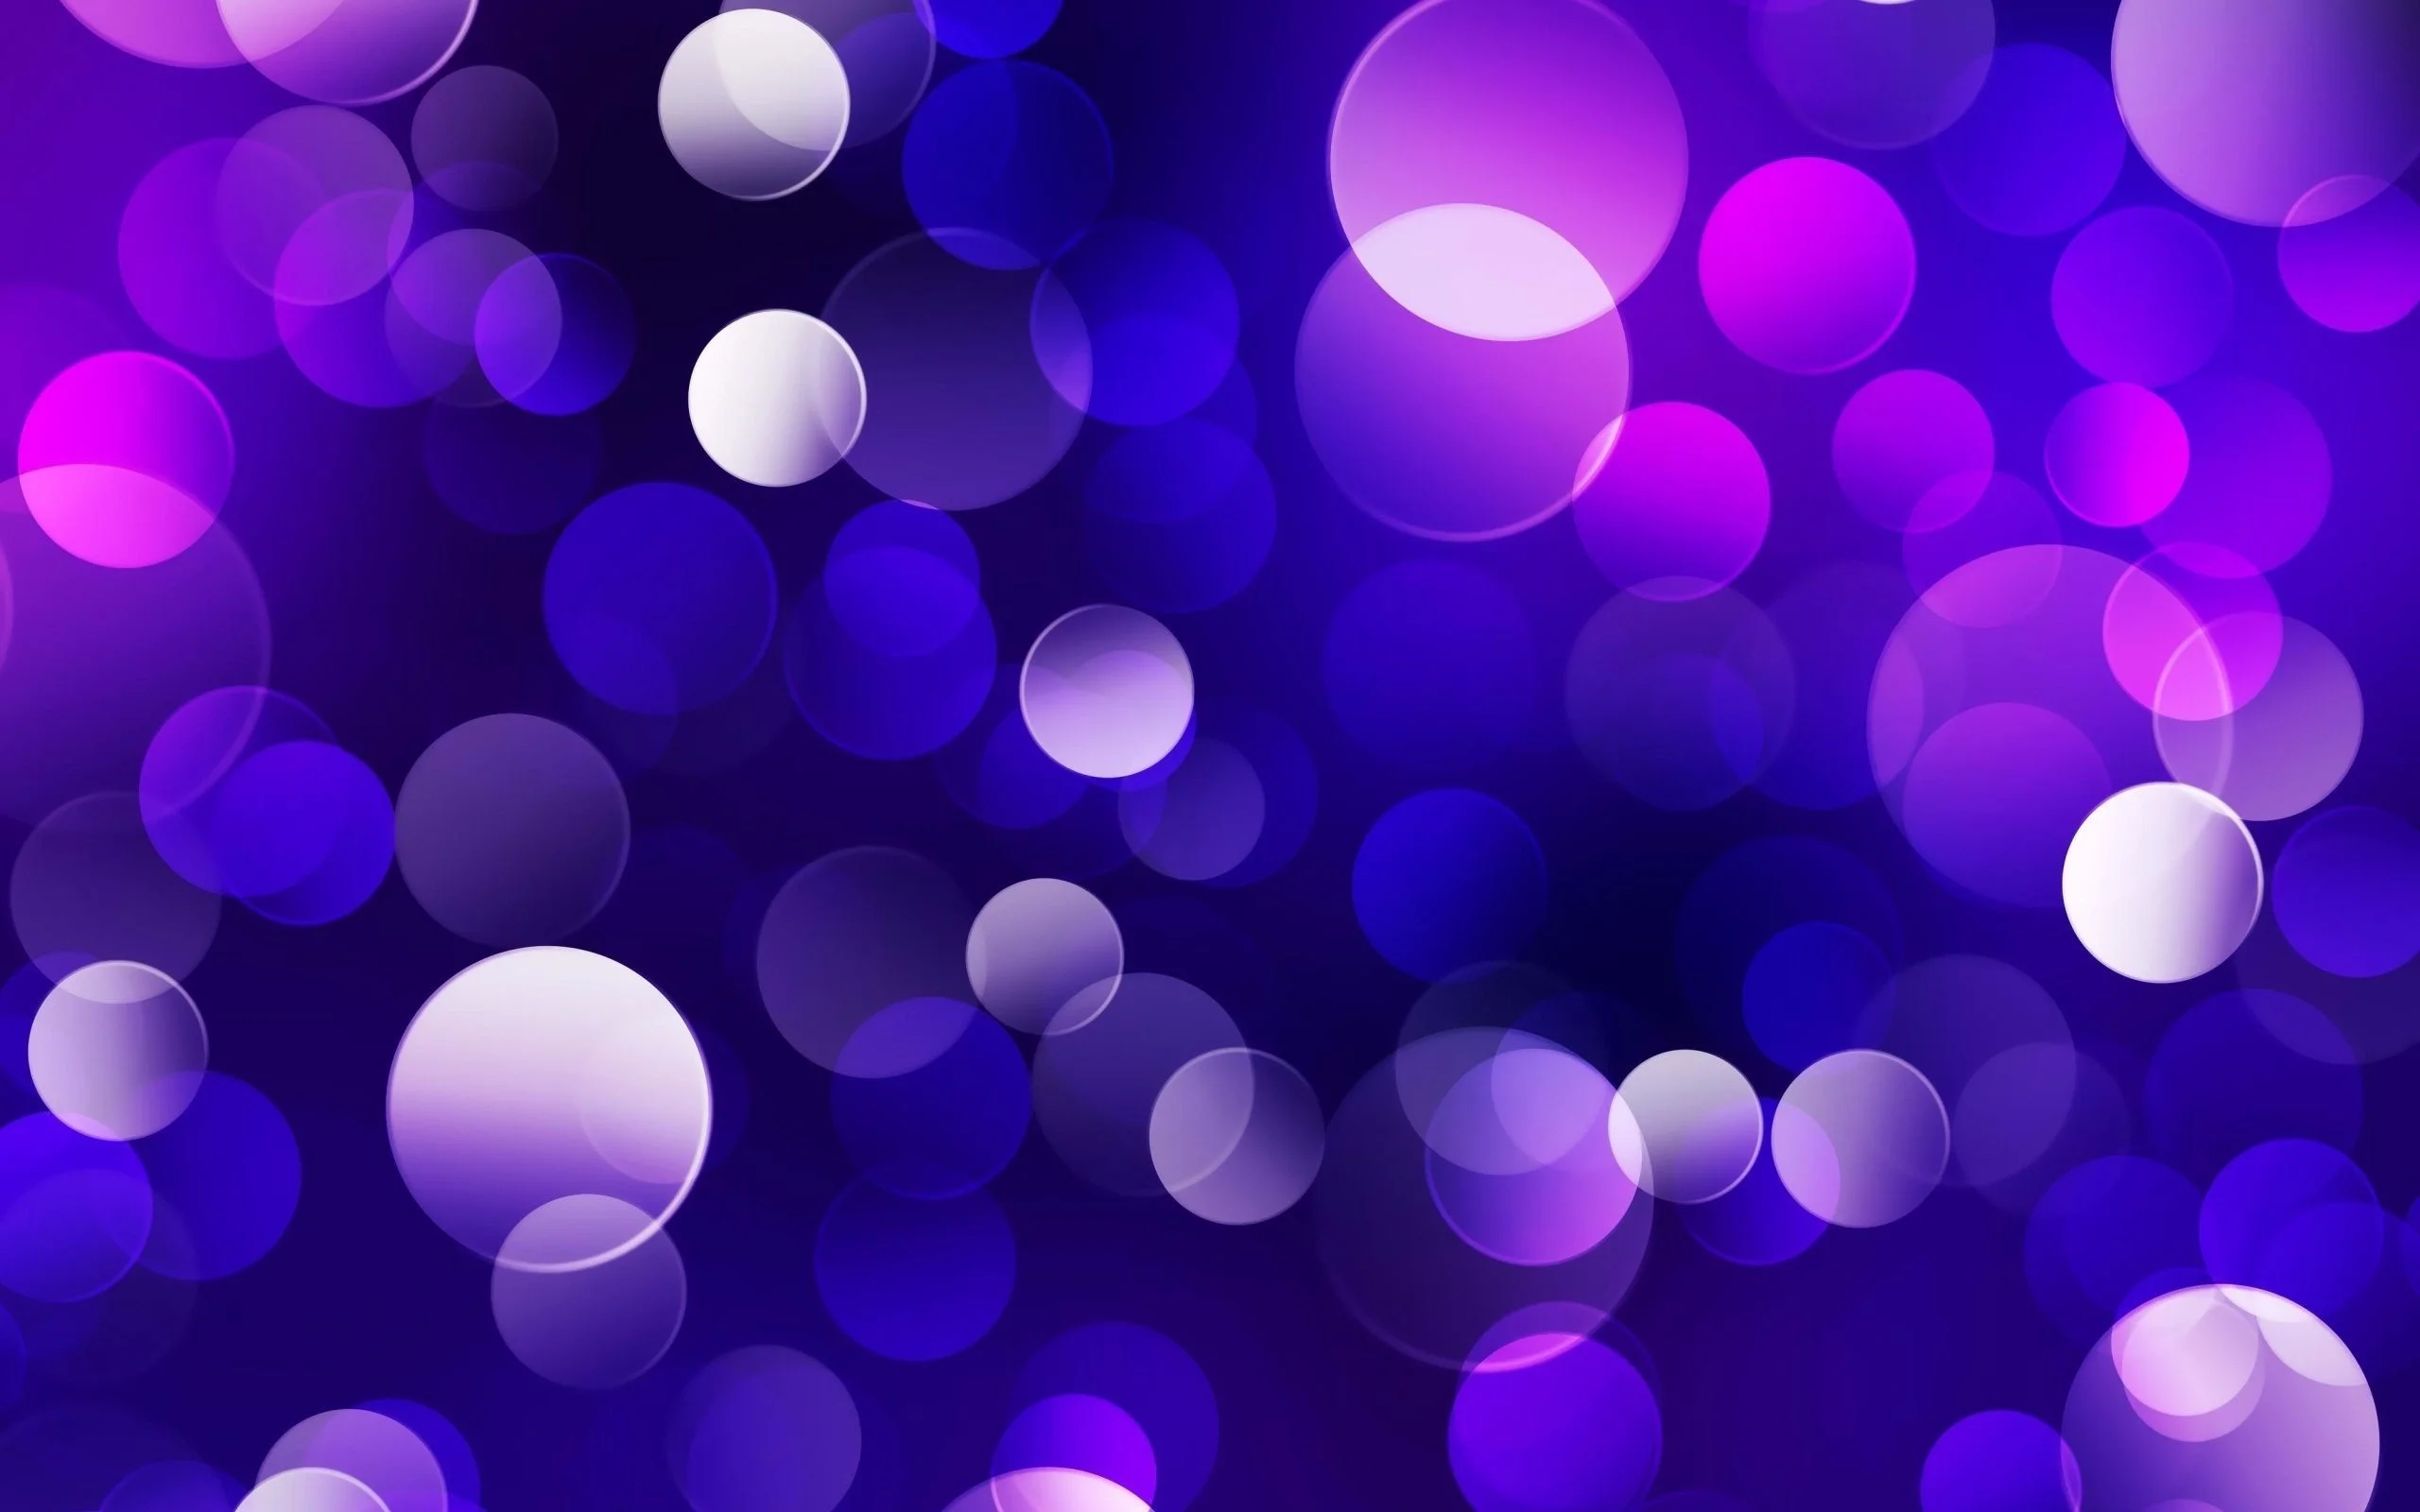 Purple abstract wallpaper widescreen desktop mobile iphone android hd wallpaper and desktop